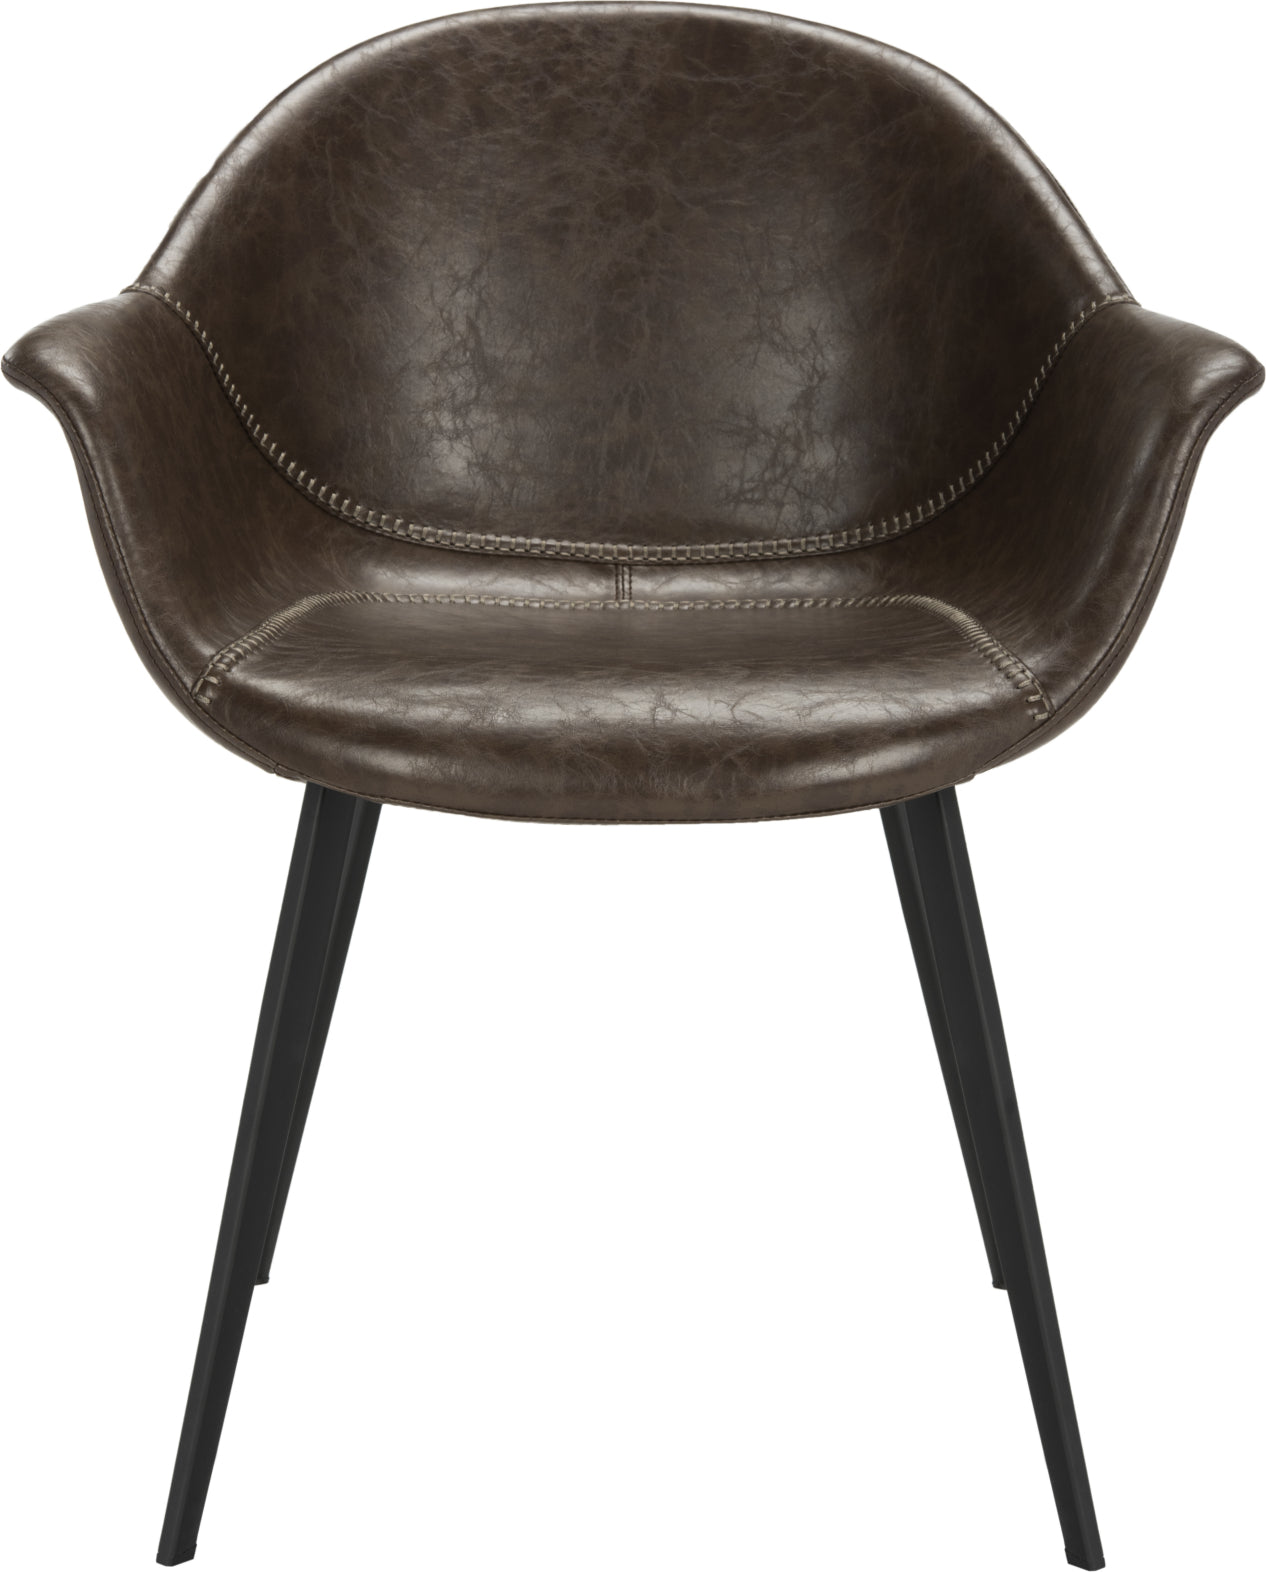 Safavieh Dublin Midcentury Modern Leather Dining Tub Chair Dark Brown and Black Furniture main image